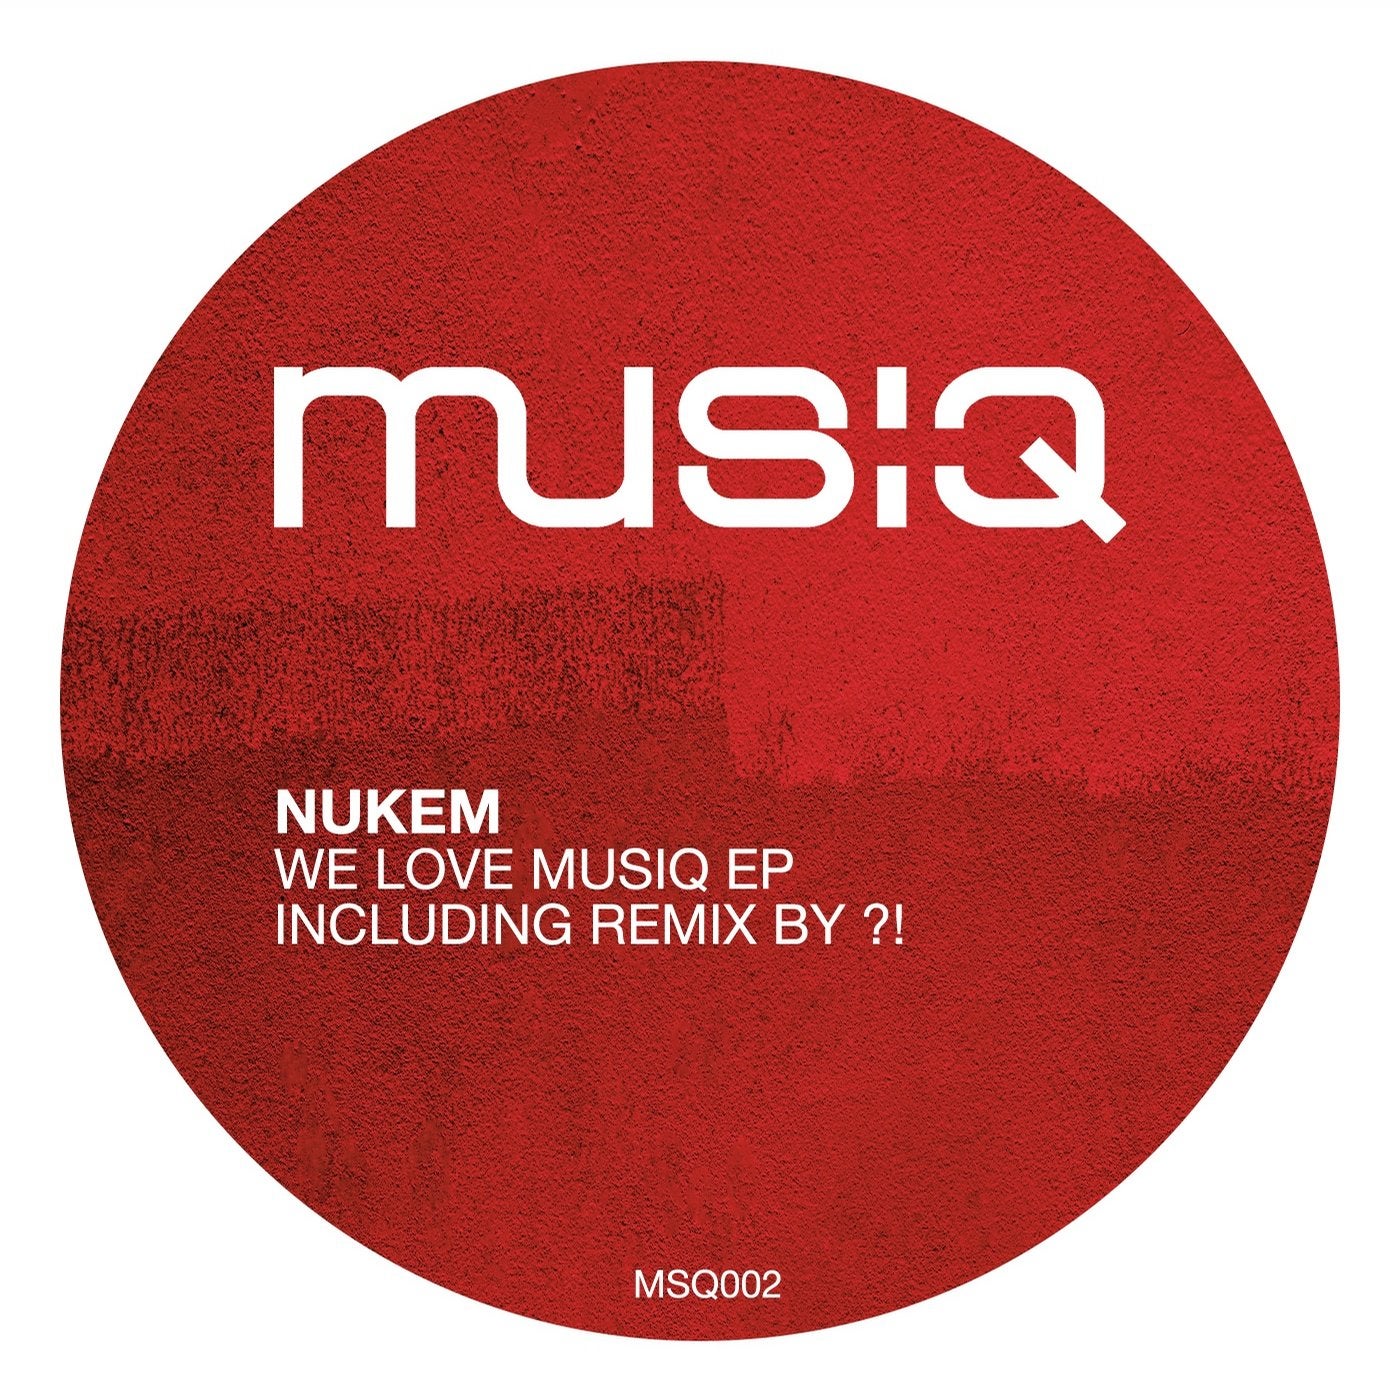 We love Musiq EP